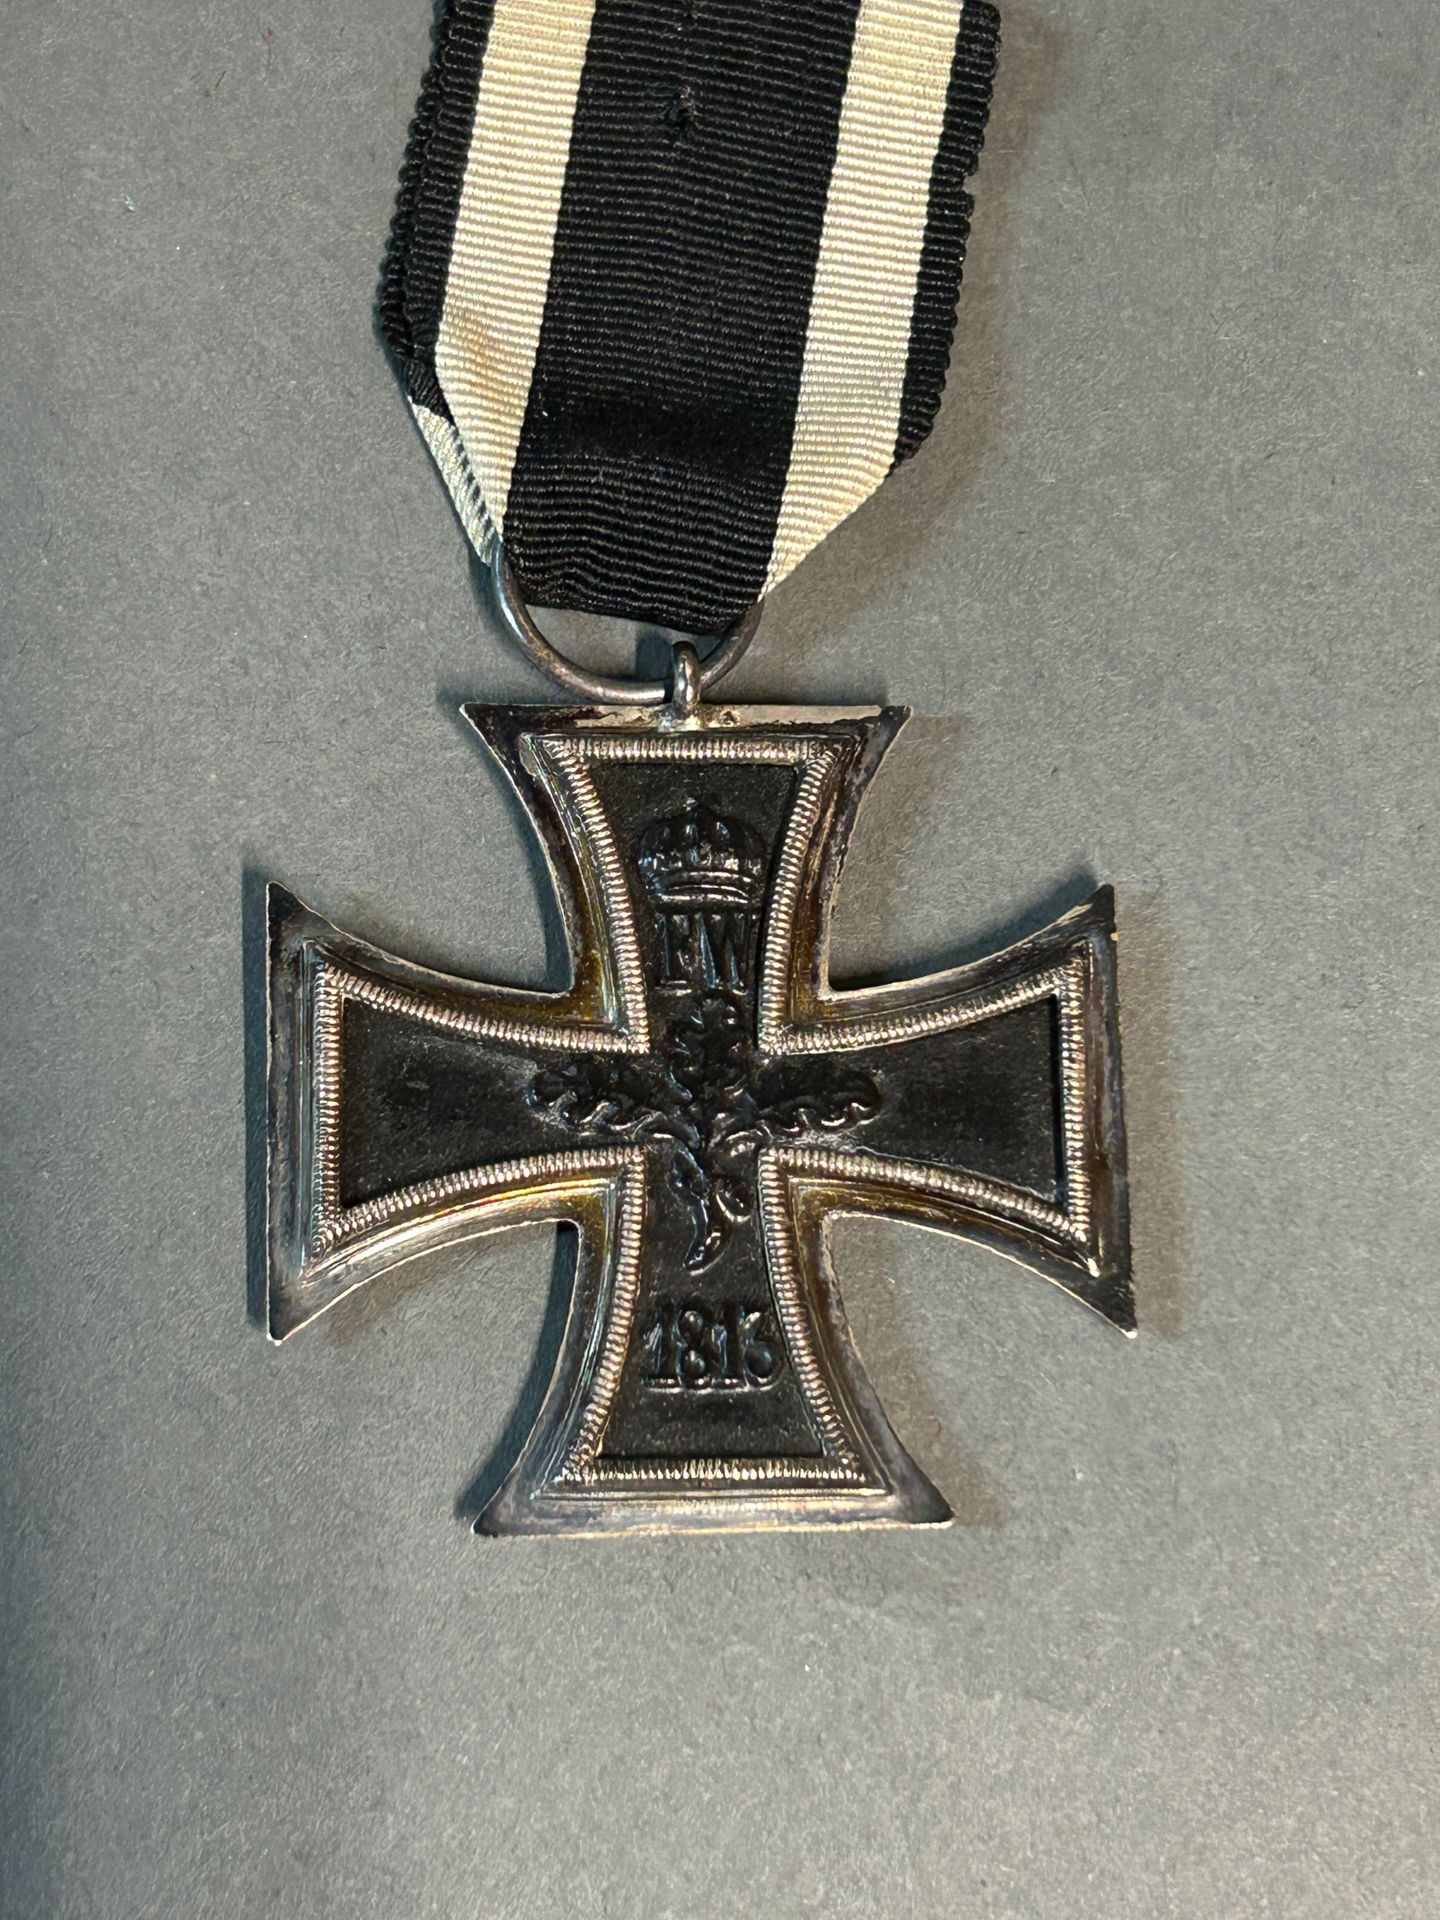 Null 二等铁十字勋章

第一次世界大战银色带子。1914

尺寸为4.40 x 4厘米。

毛重：17.56克。